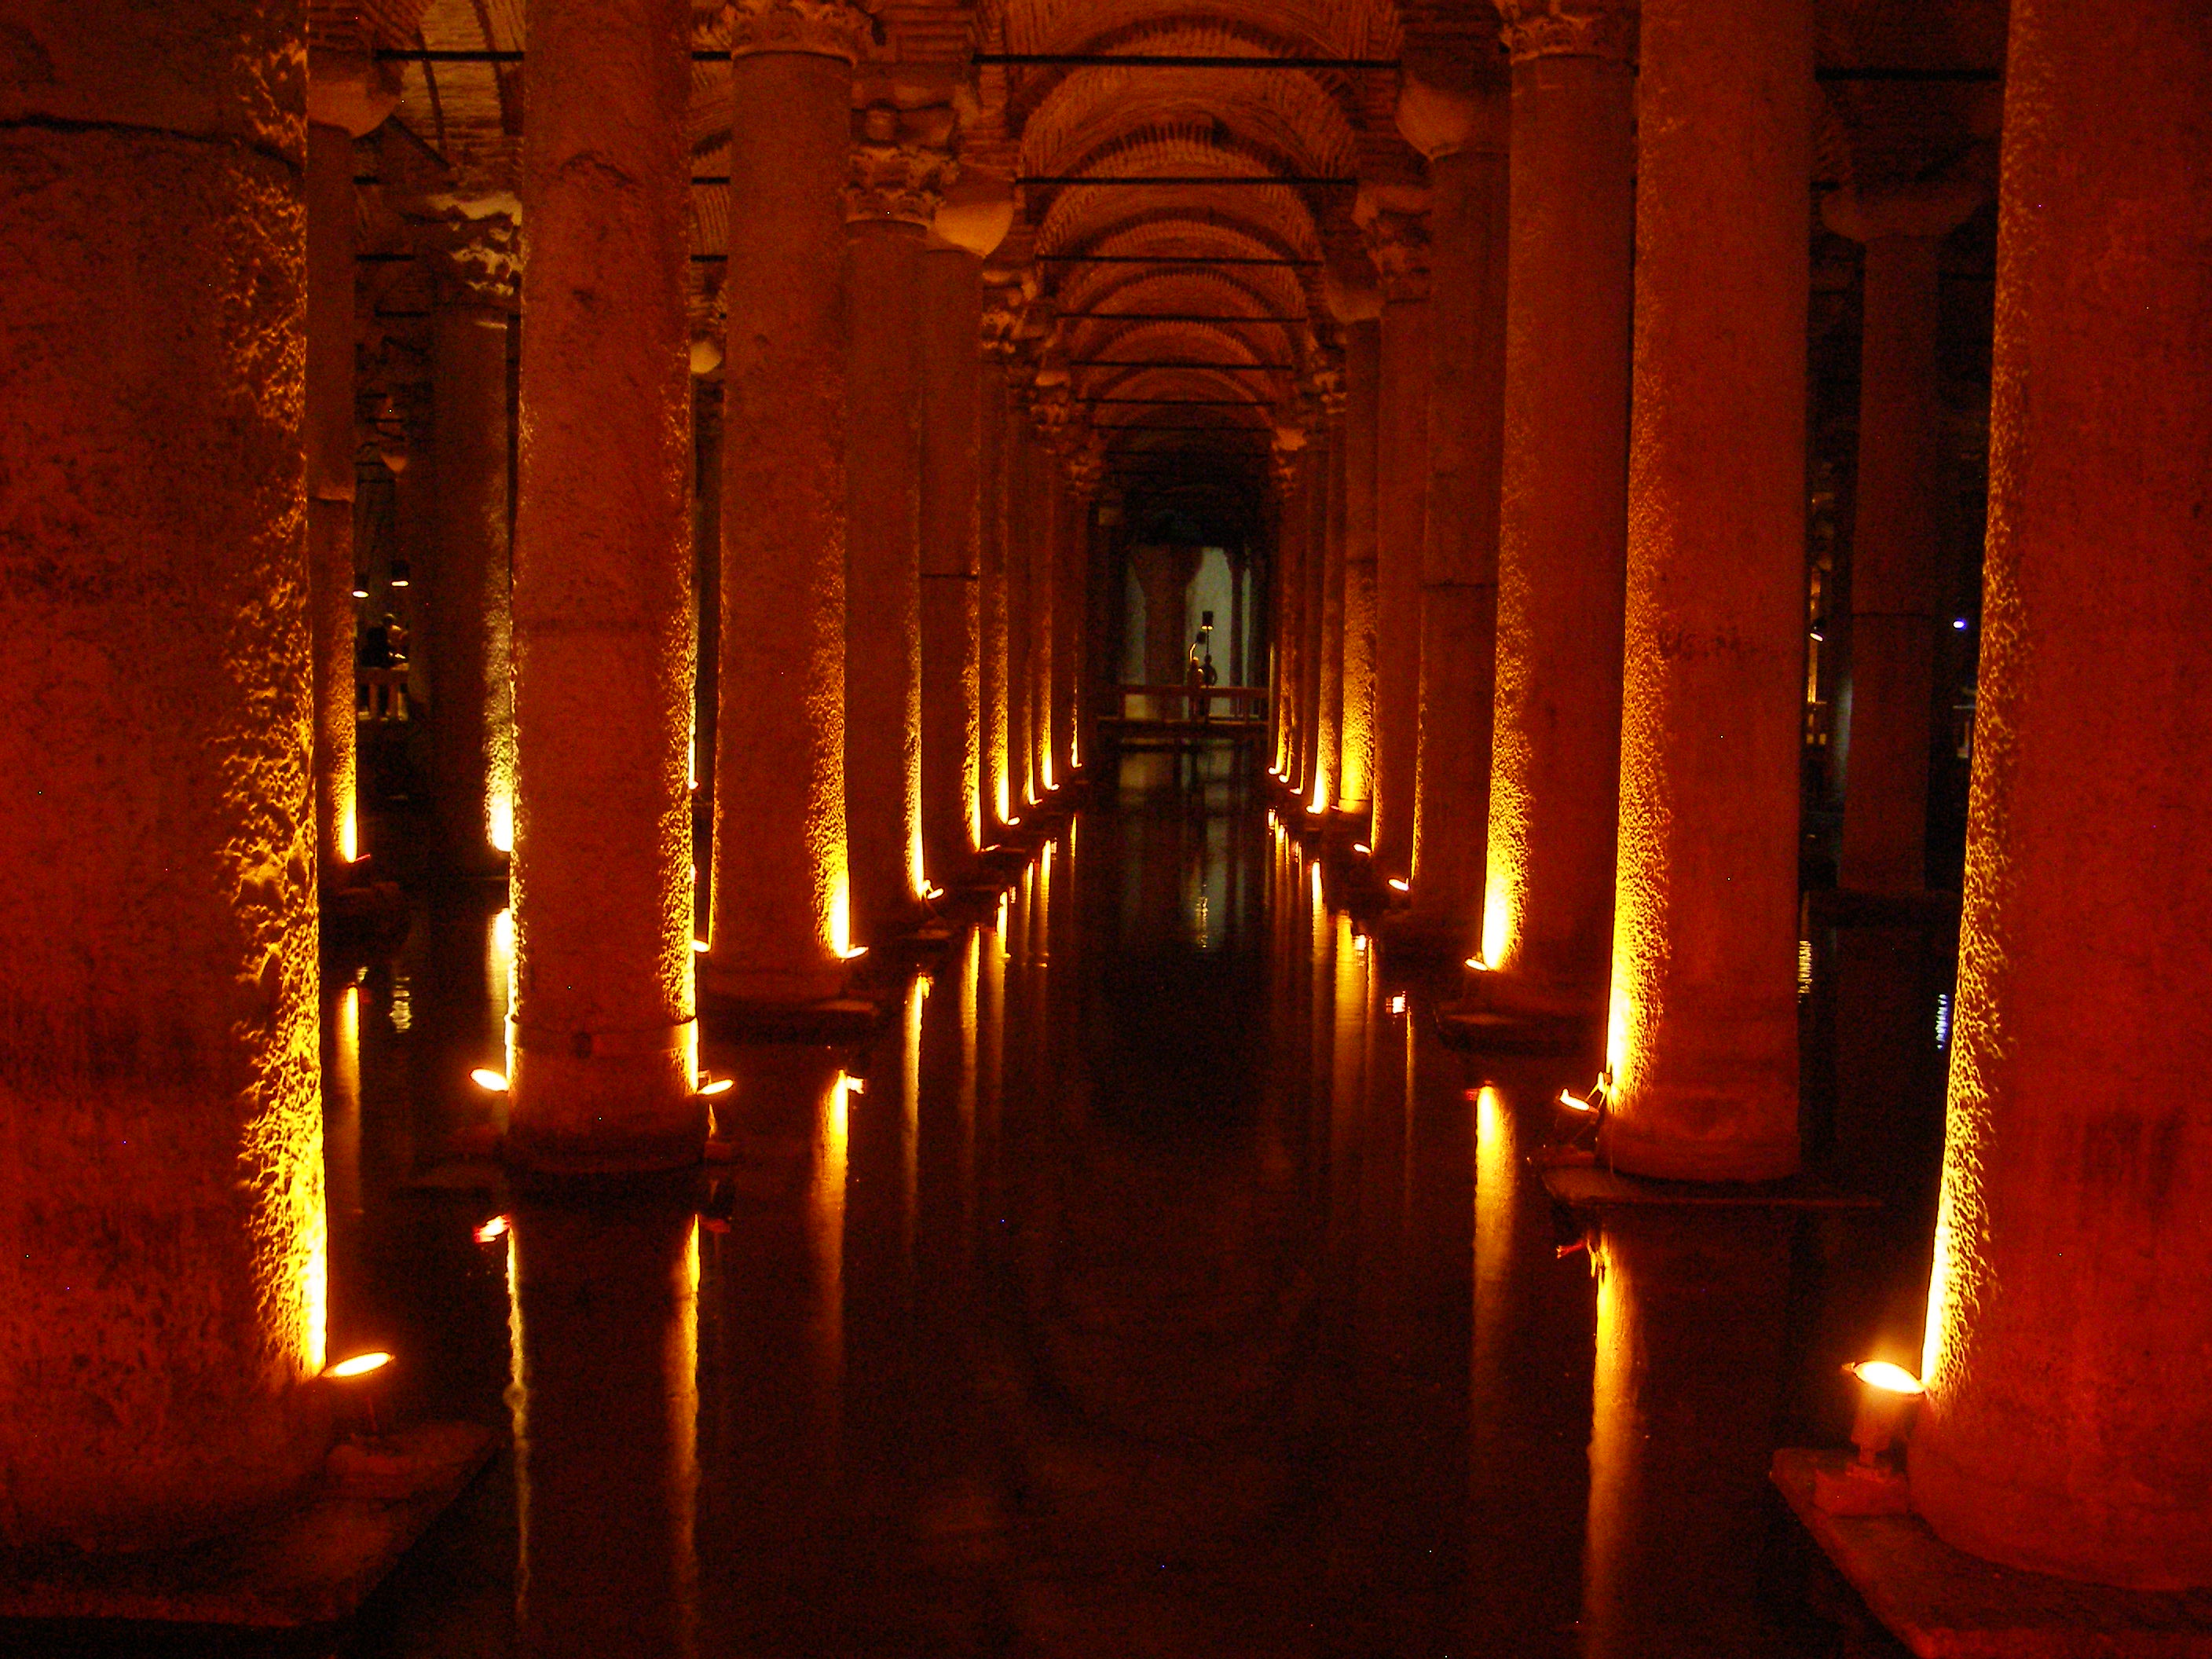 667 - Istanbul antica basilica cisterna - Turchia